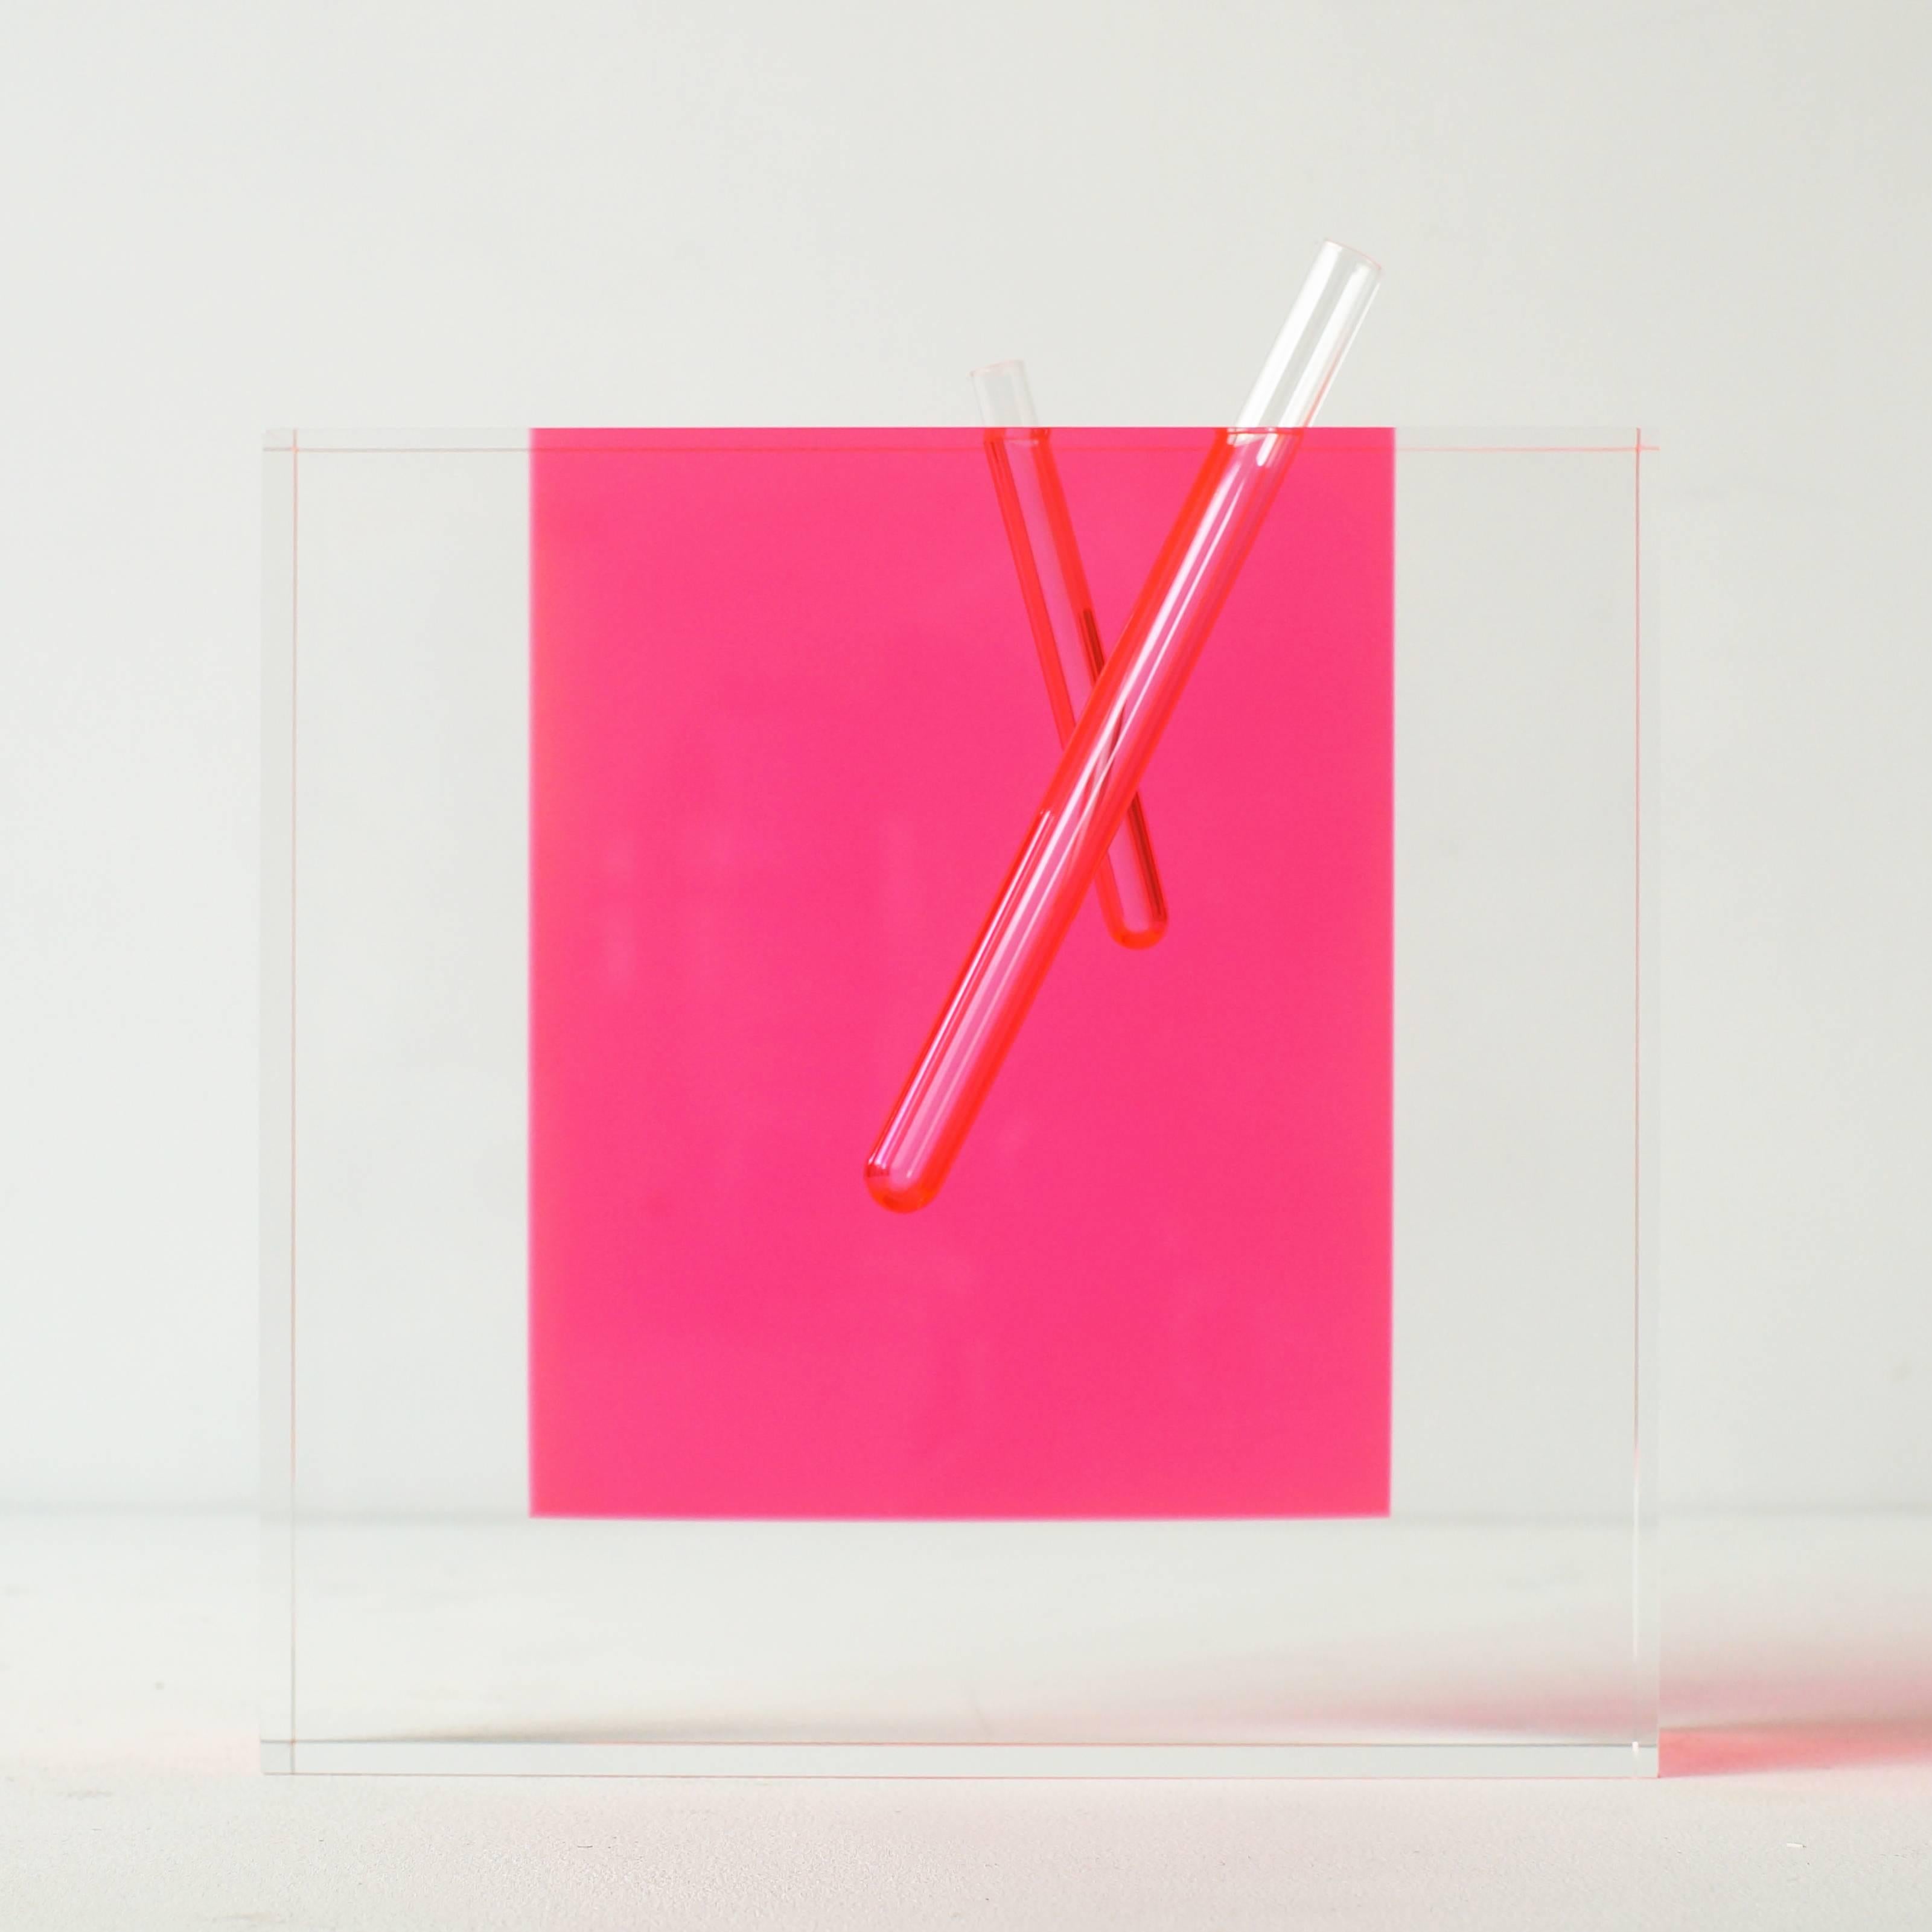 Shiro Kuramata acrylic pink vase large model. Mint condition. Pink and clear acrylic bock with glass tube.